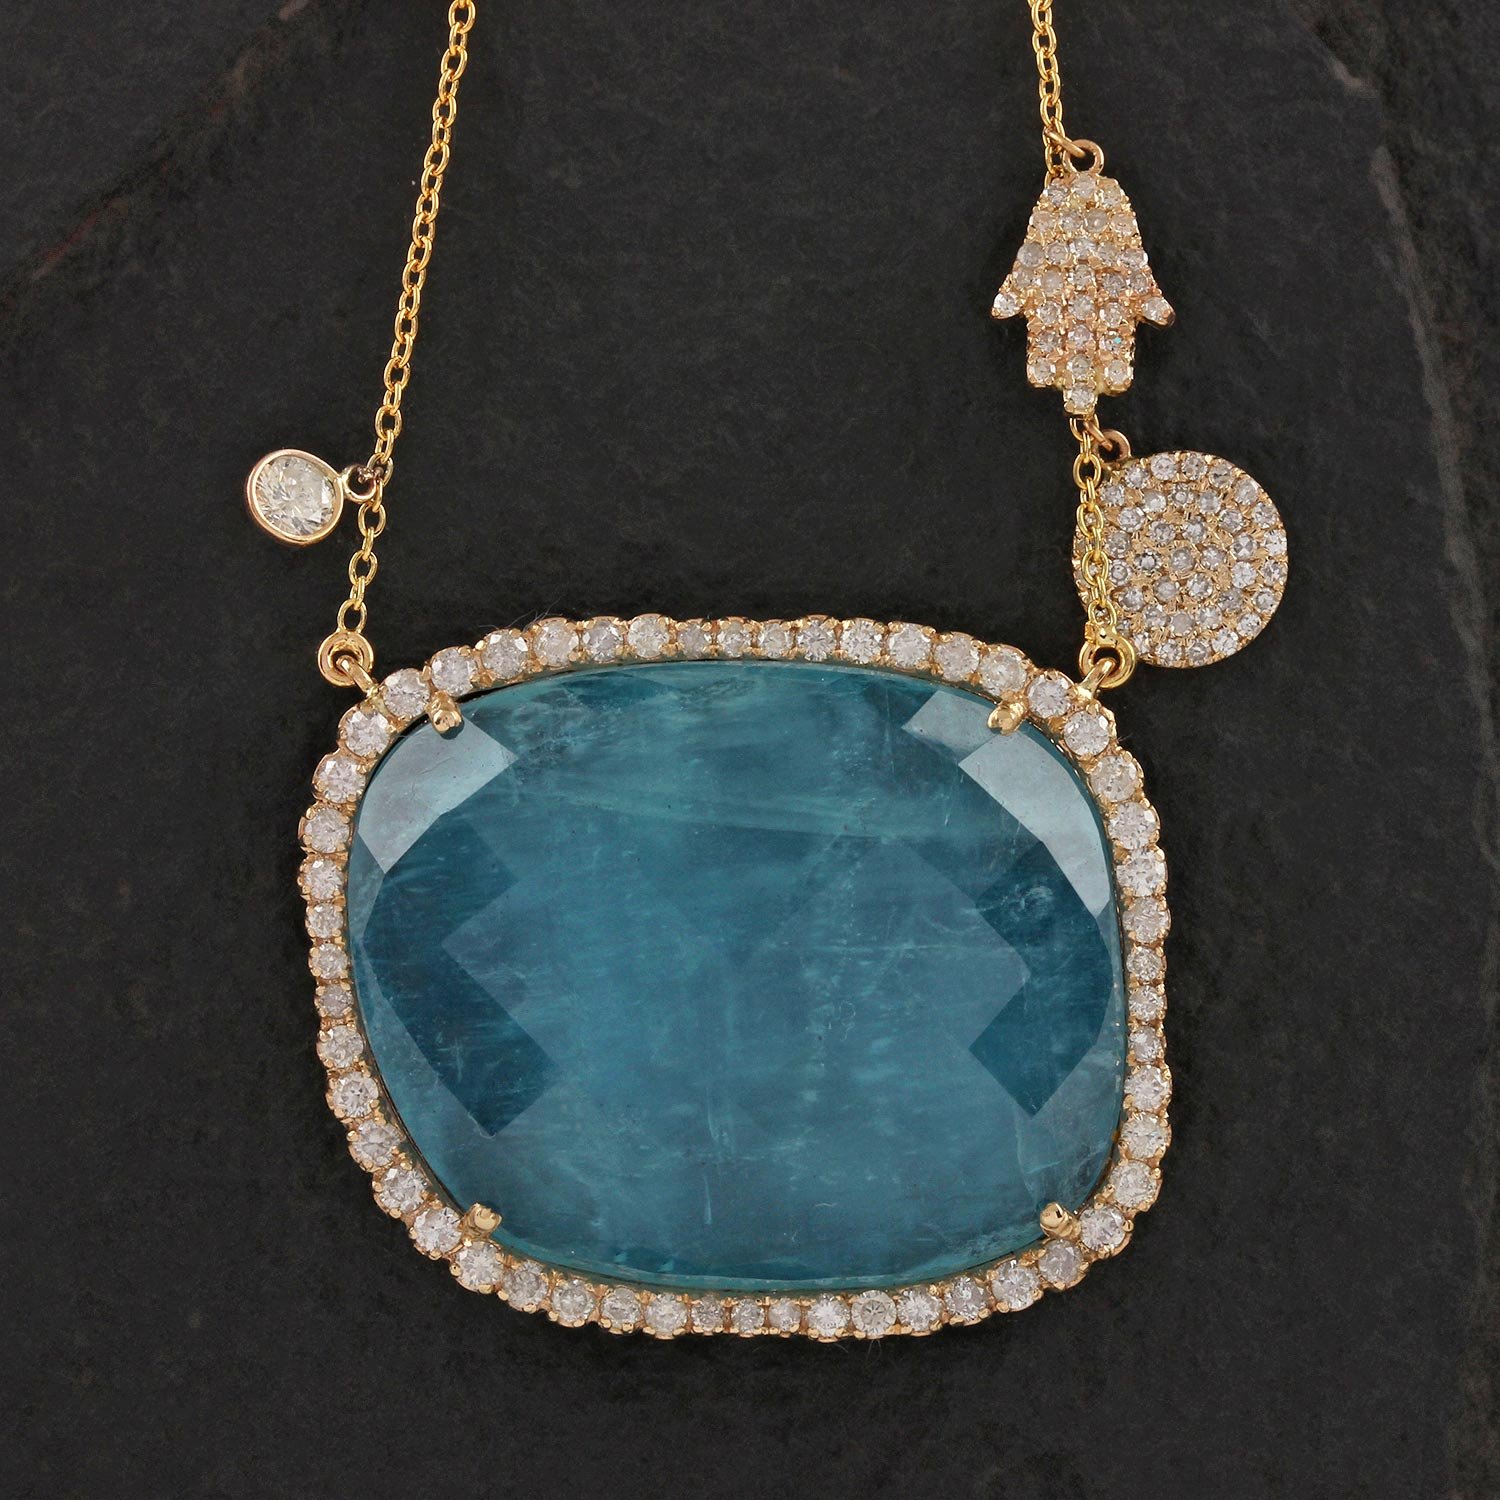 Aquamarine Pave Diamond Pendant Chain Necklace 14K Solid Gold Fine Jewelry